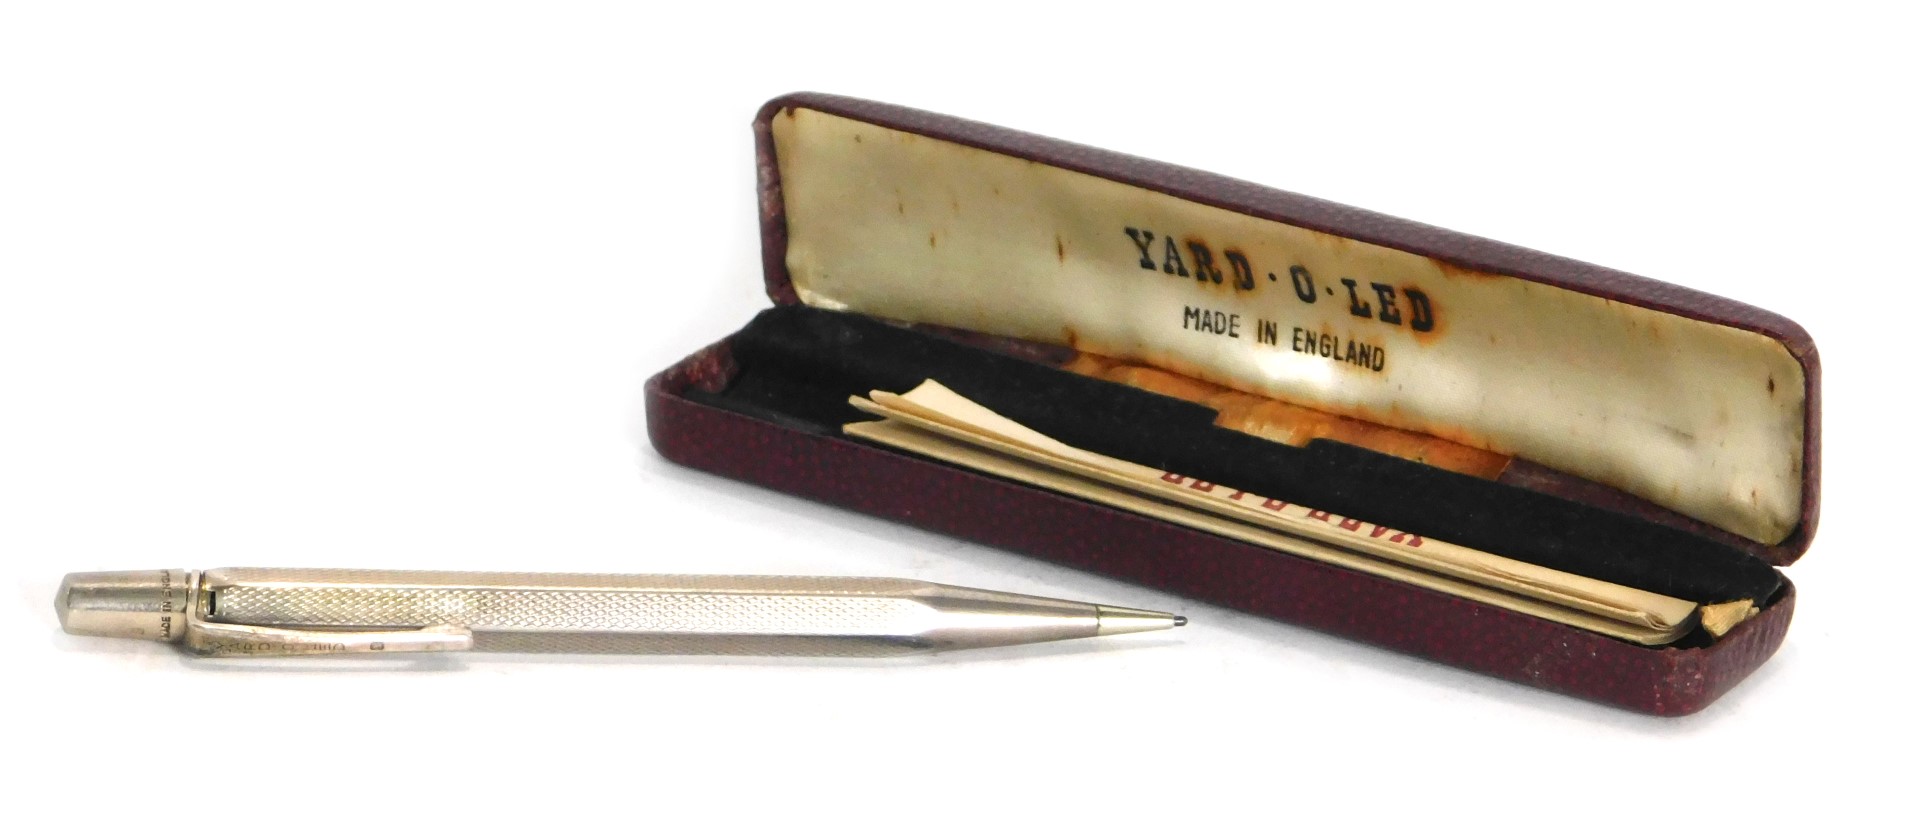 A George VI silver cased Yard.O.Lead pencil, maker JM & Co, (Johnson, Matthey & Co) London 1938, 0.7